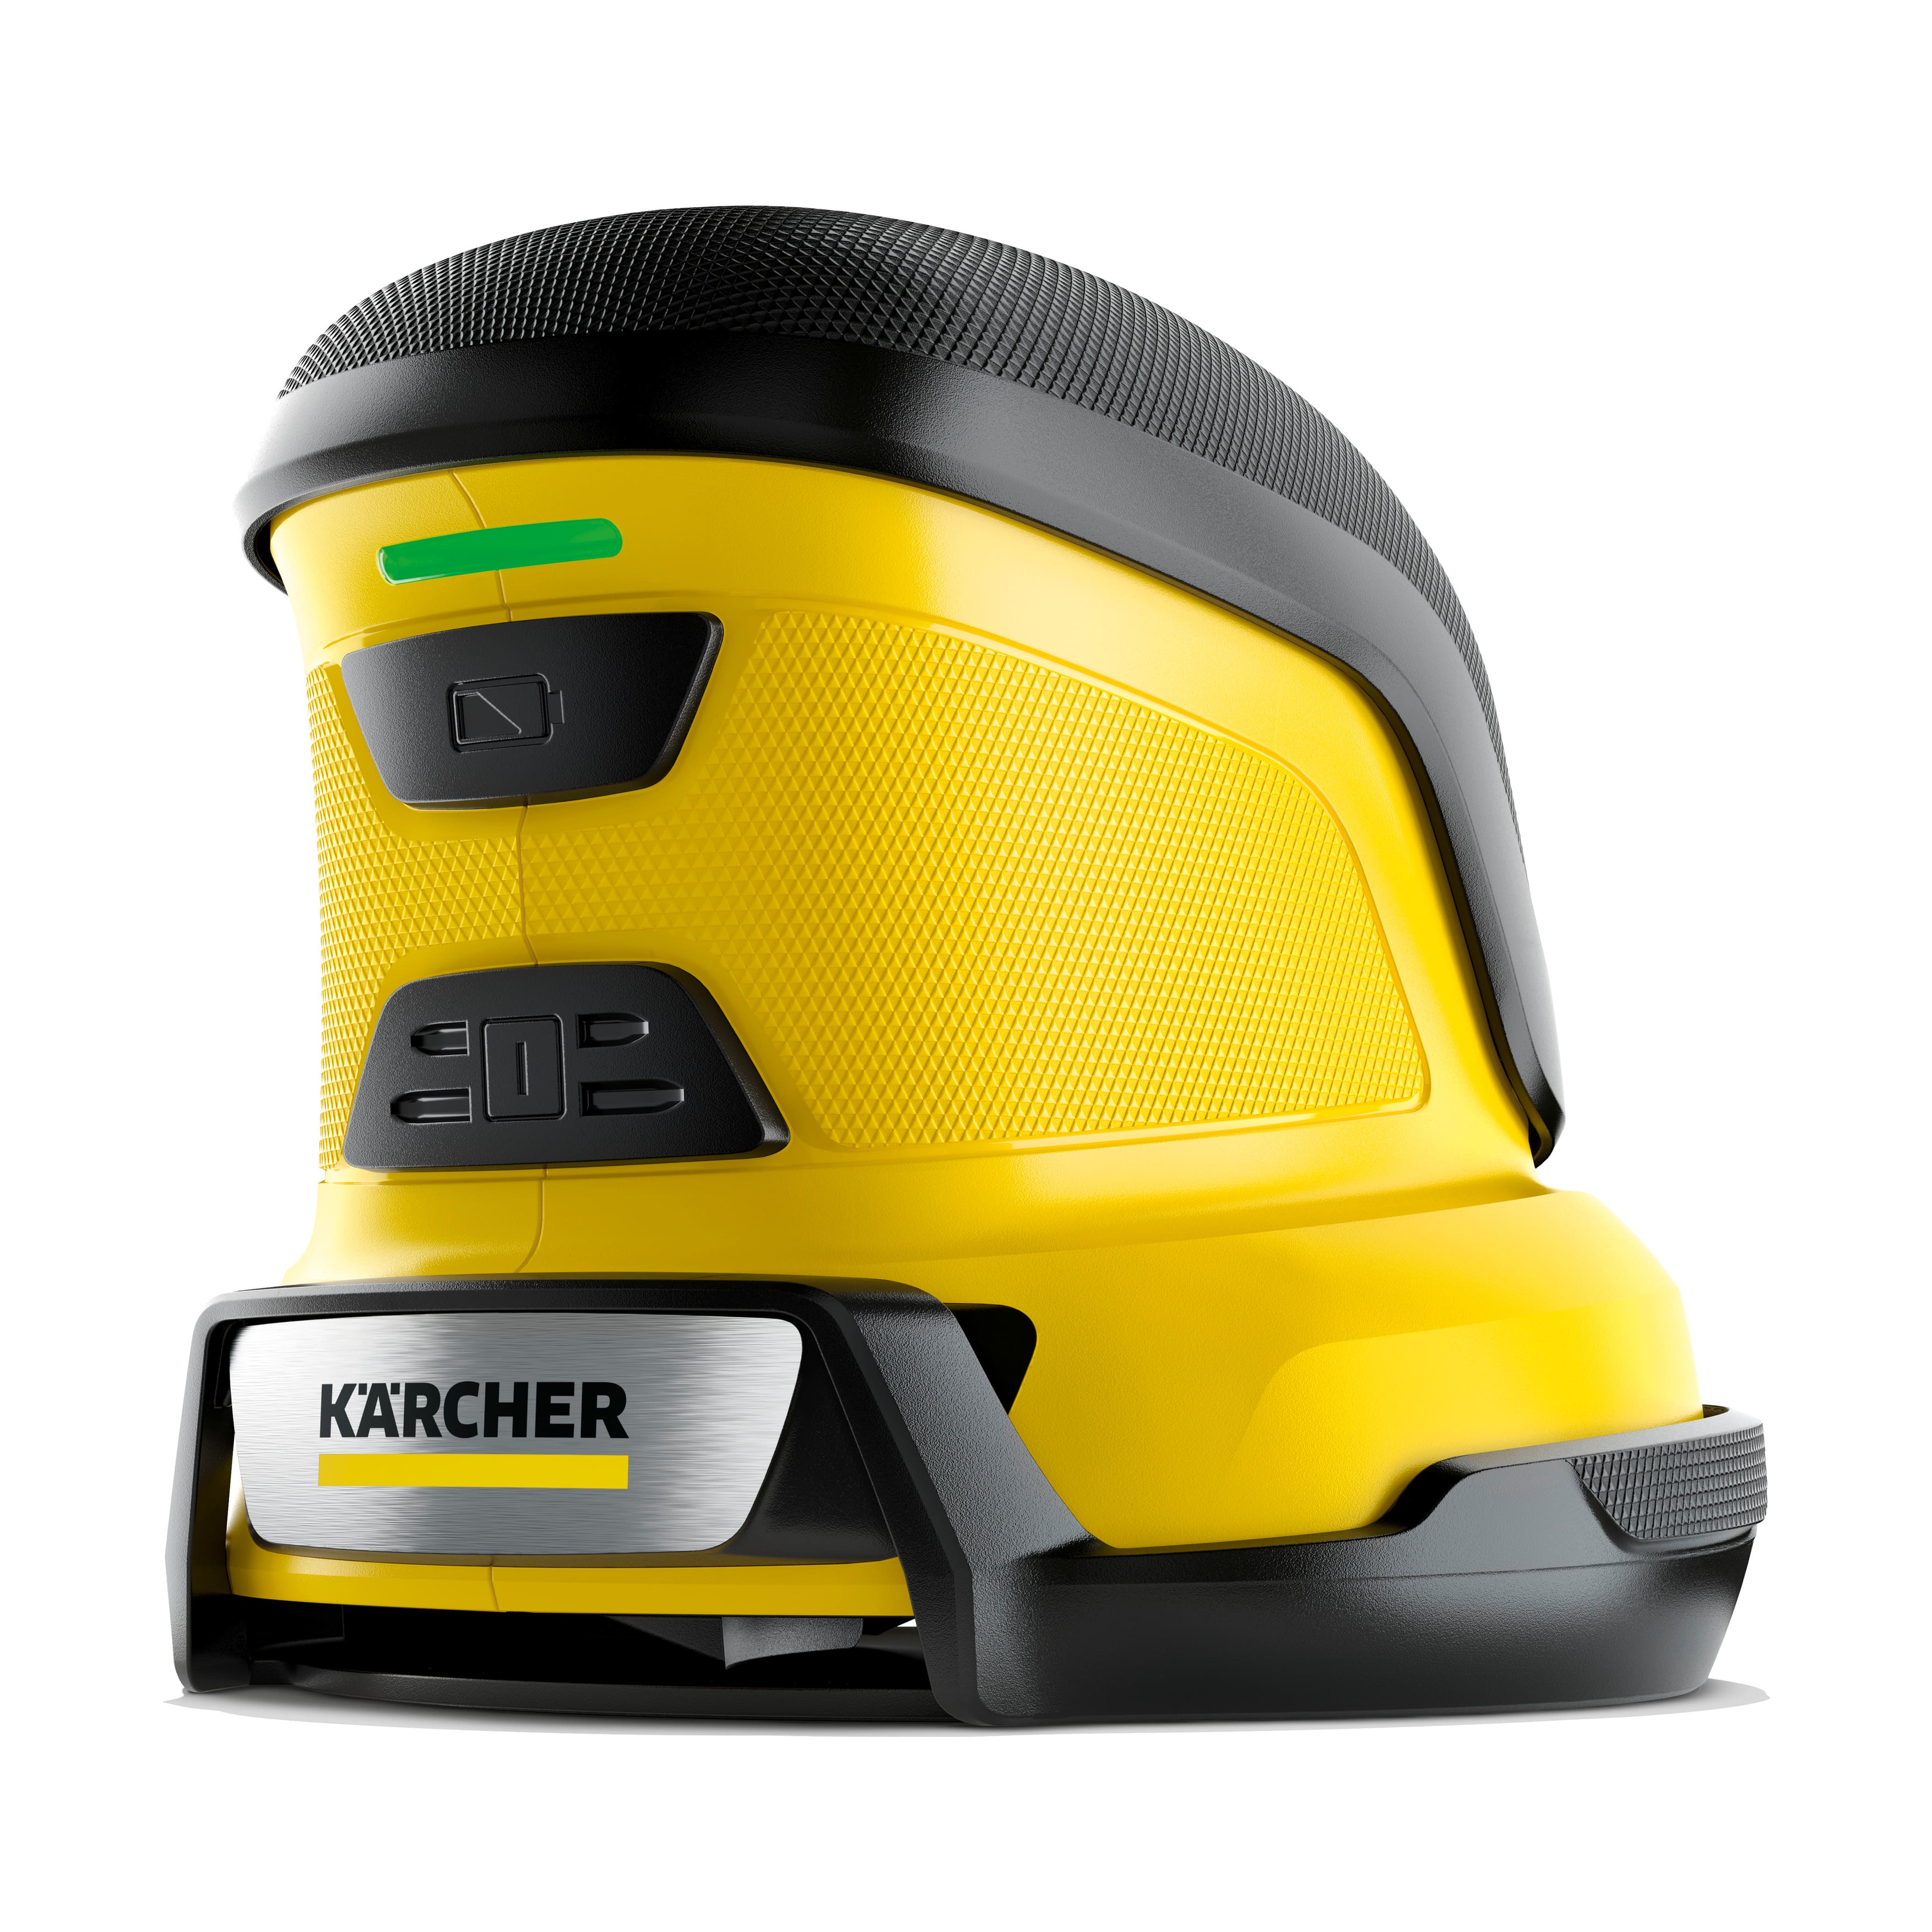 Karcher Edi 4 Cordless Electric Handheld Ice Scraper, Snow & Ice Removal, Patio, Garden & Garage